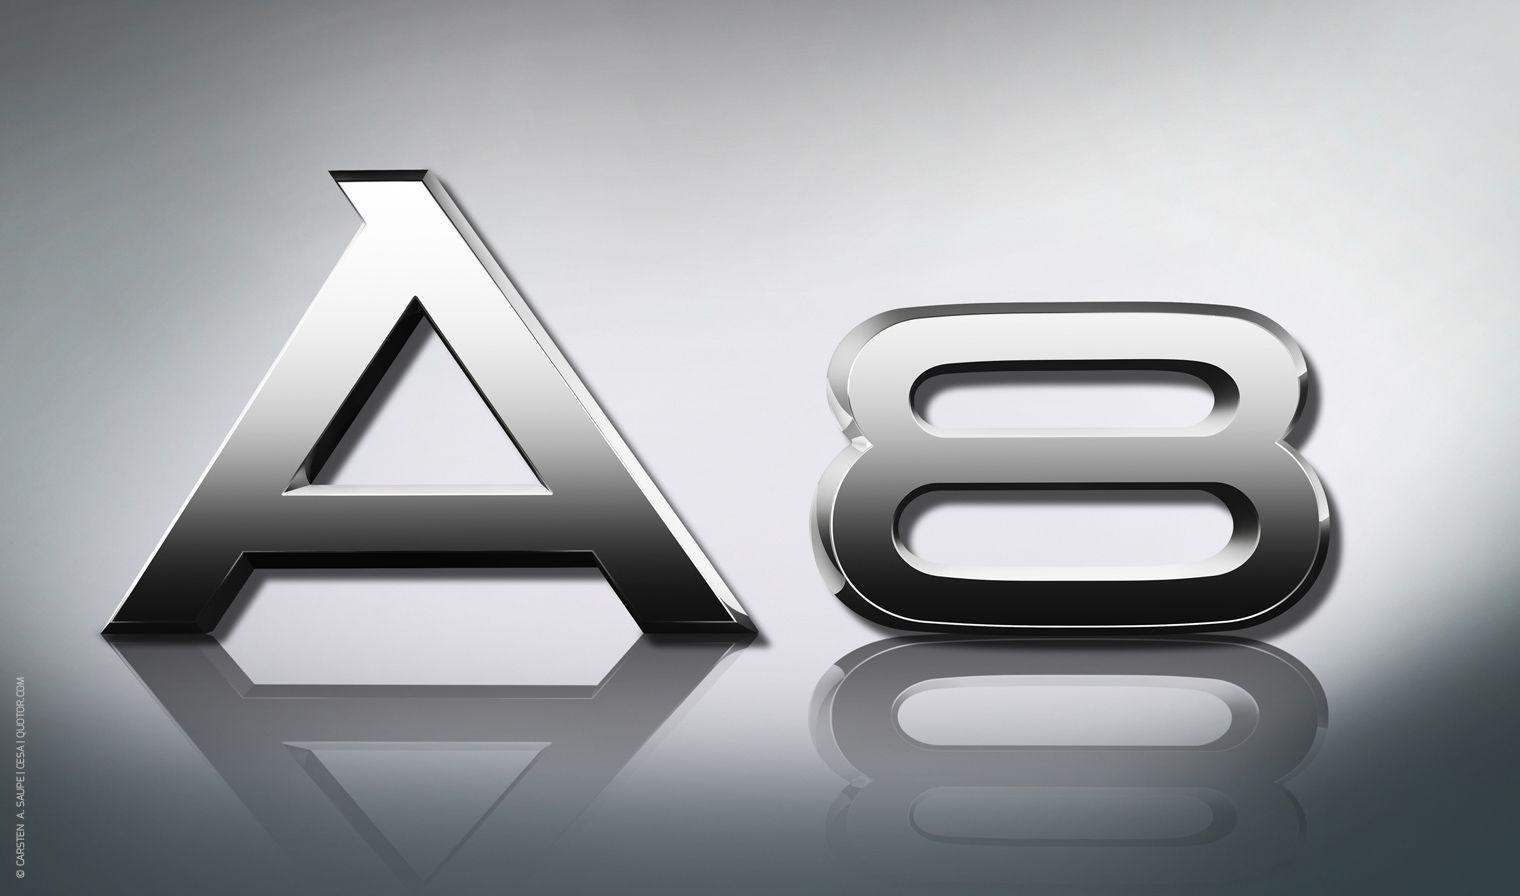 A8 Logo - QUOTOR DESIGN: Quotor Design